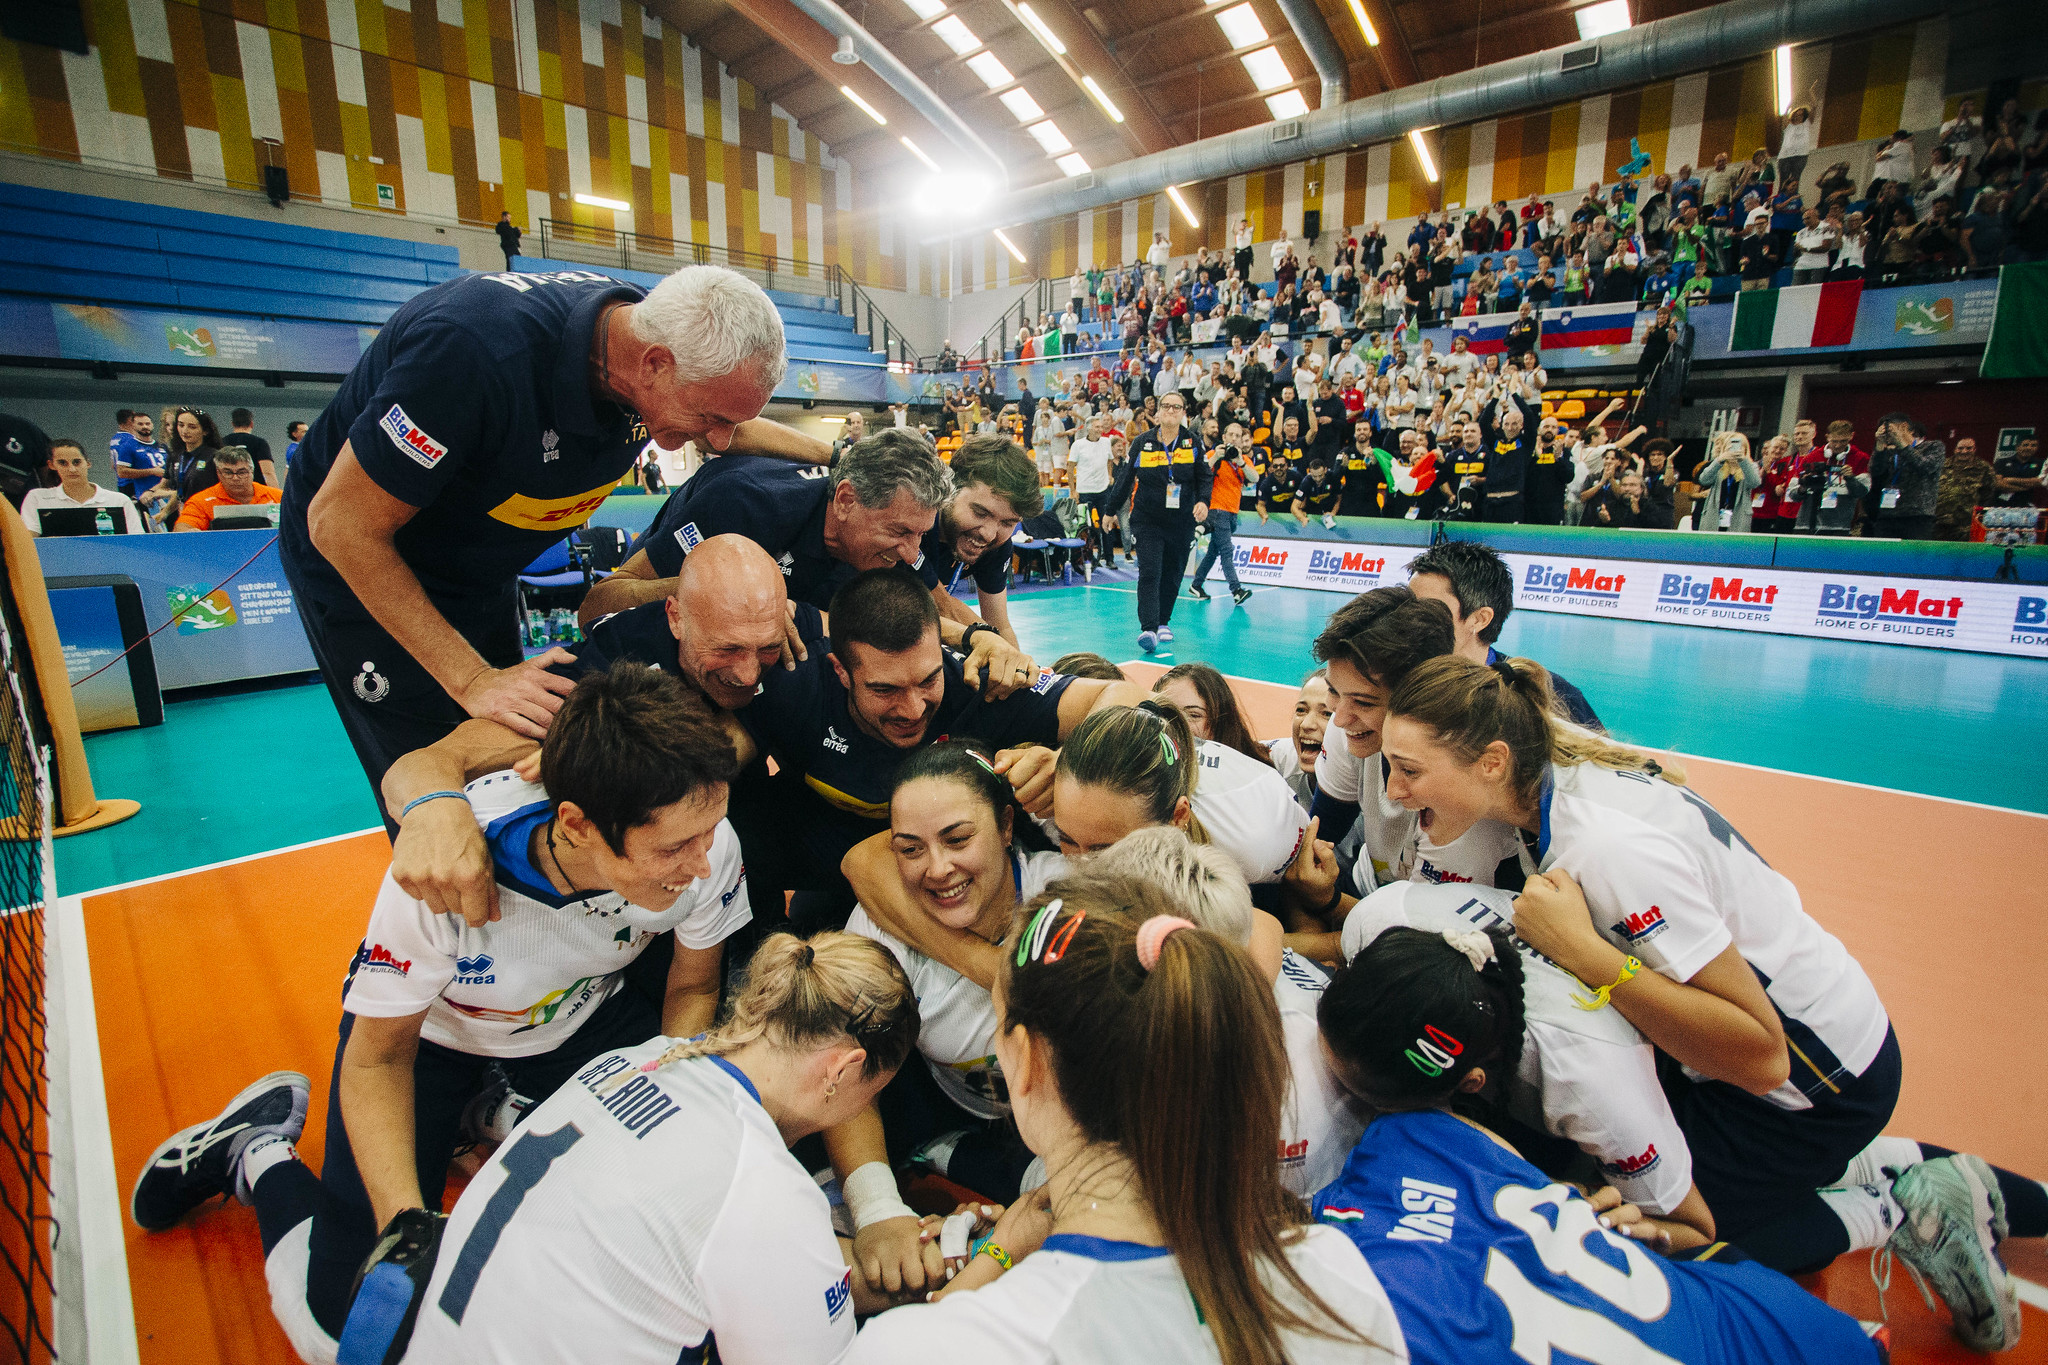 bigmat nazionale sitting volley femminile europeo campionesse europee